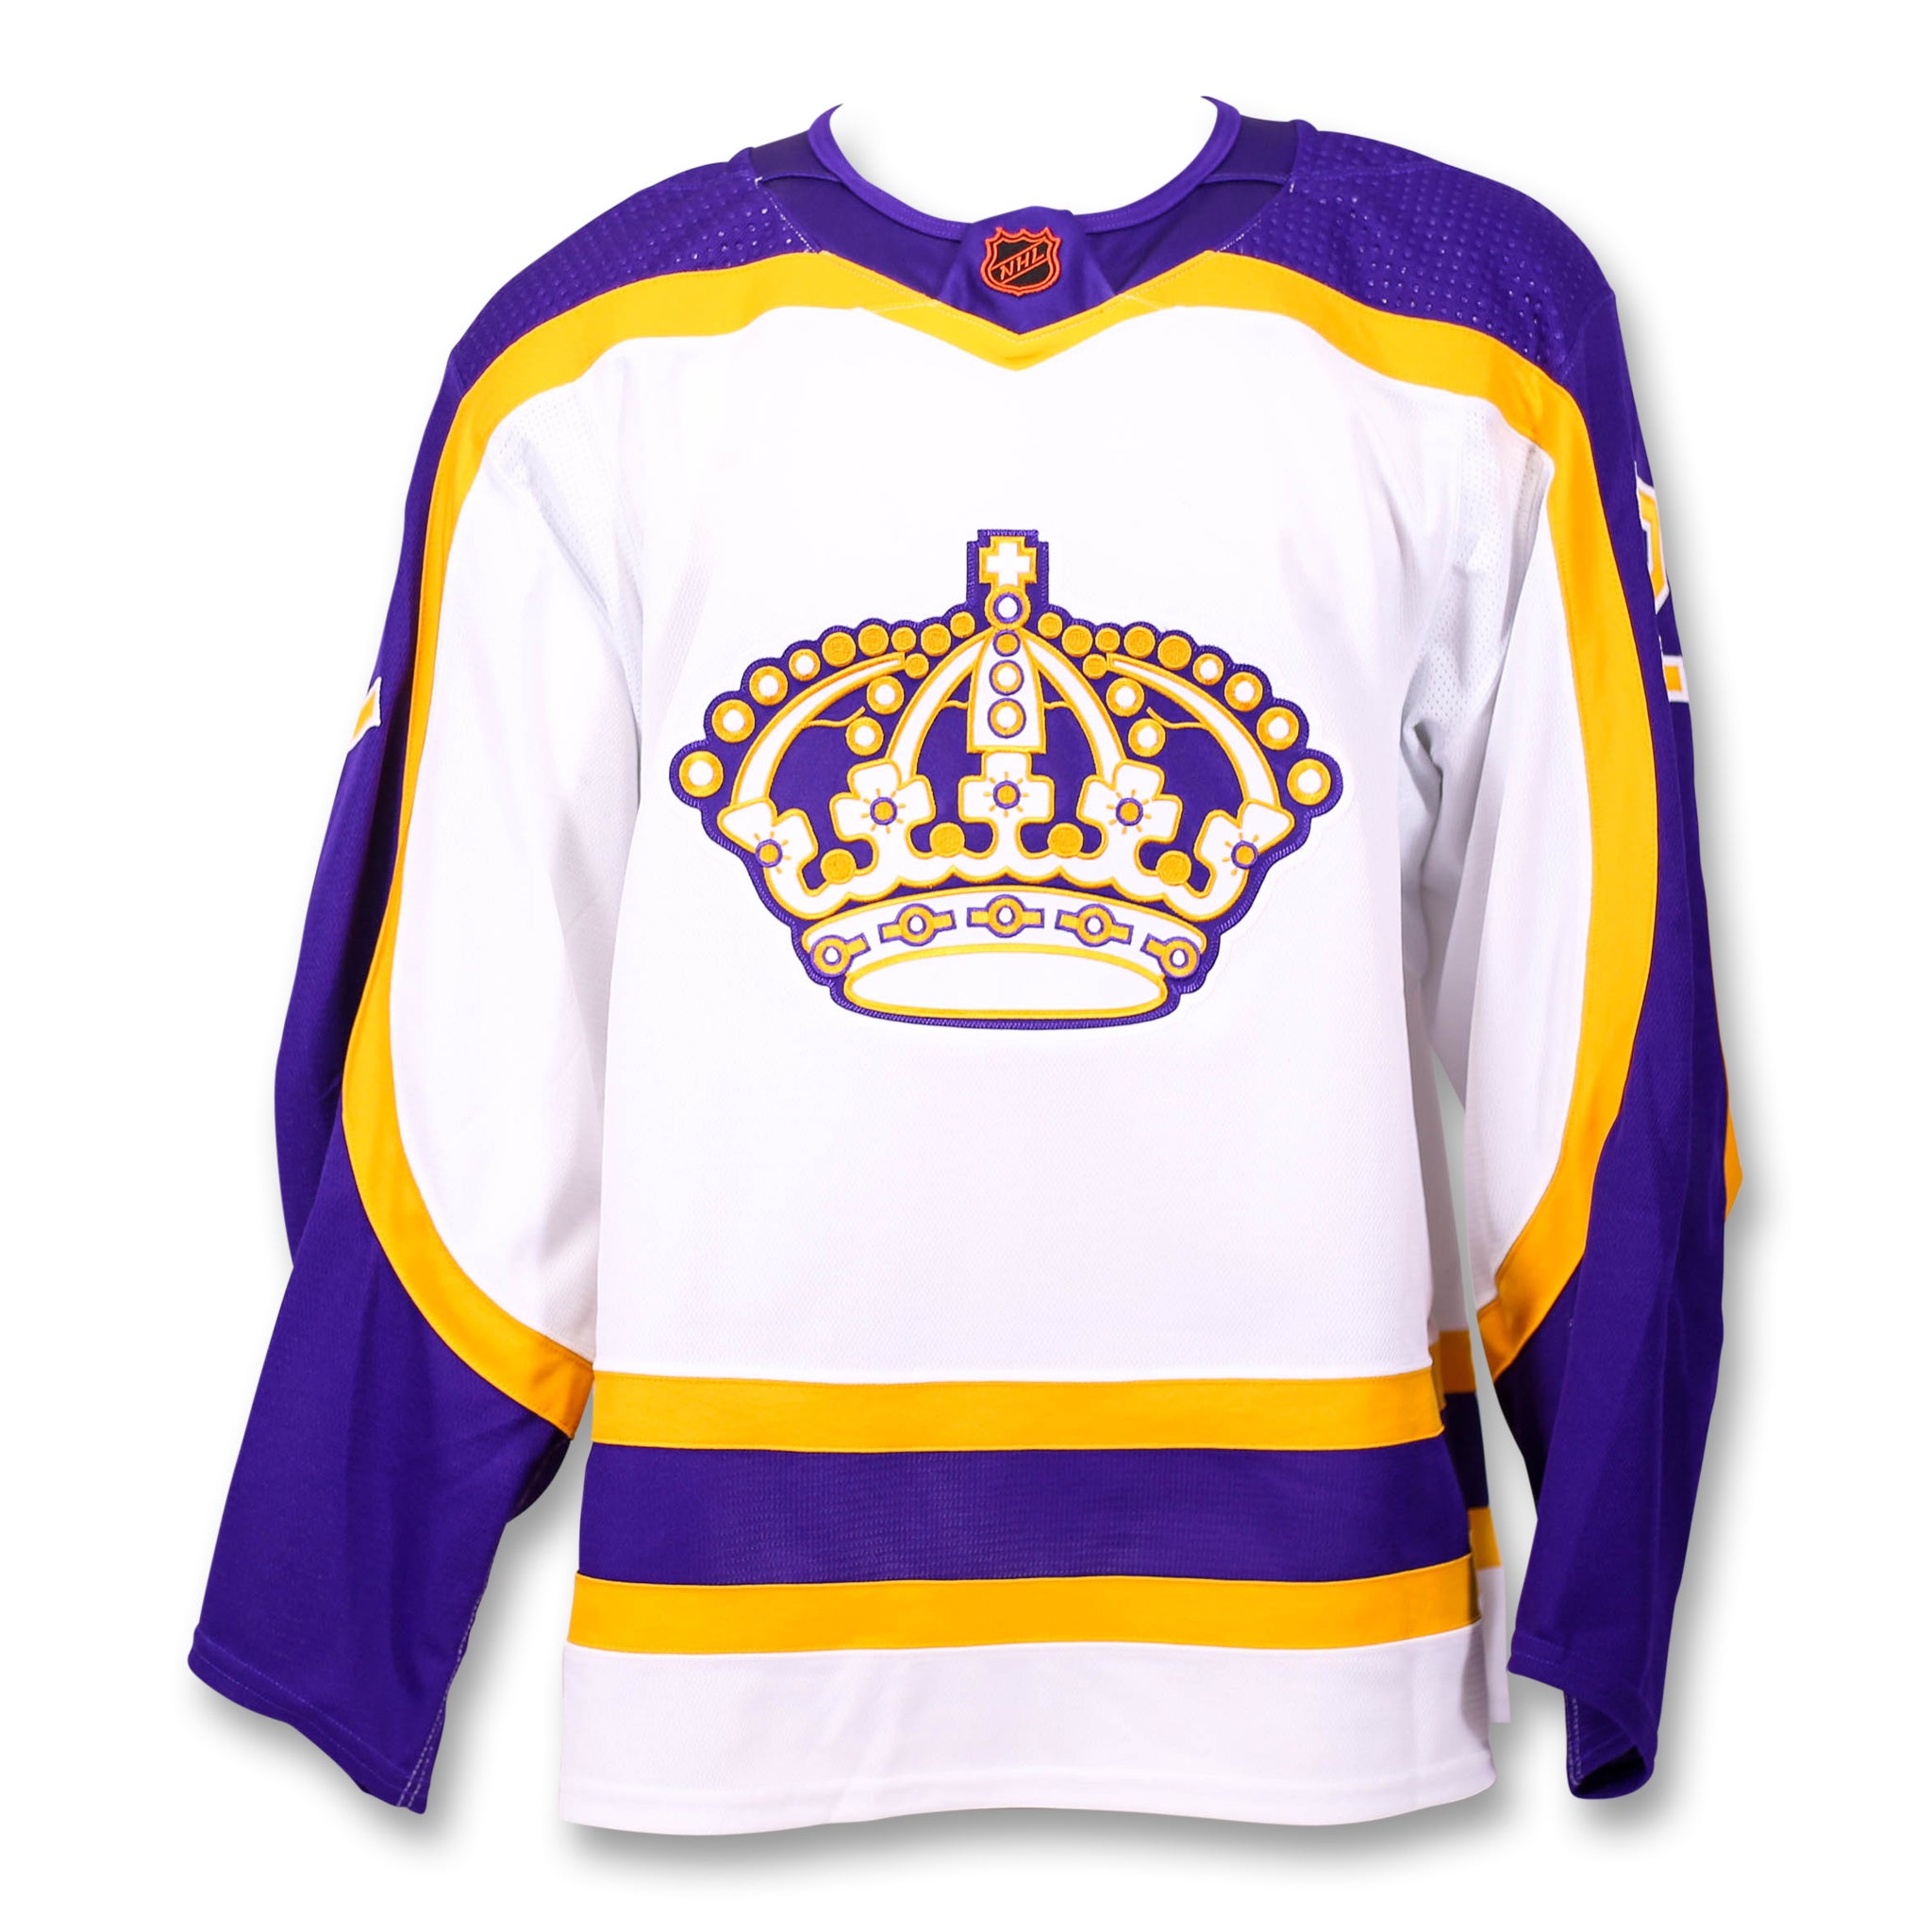 la kings original jersey